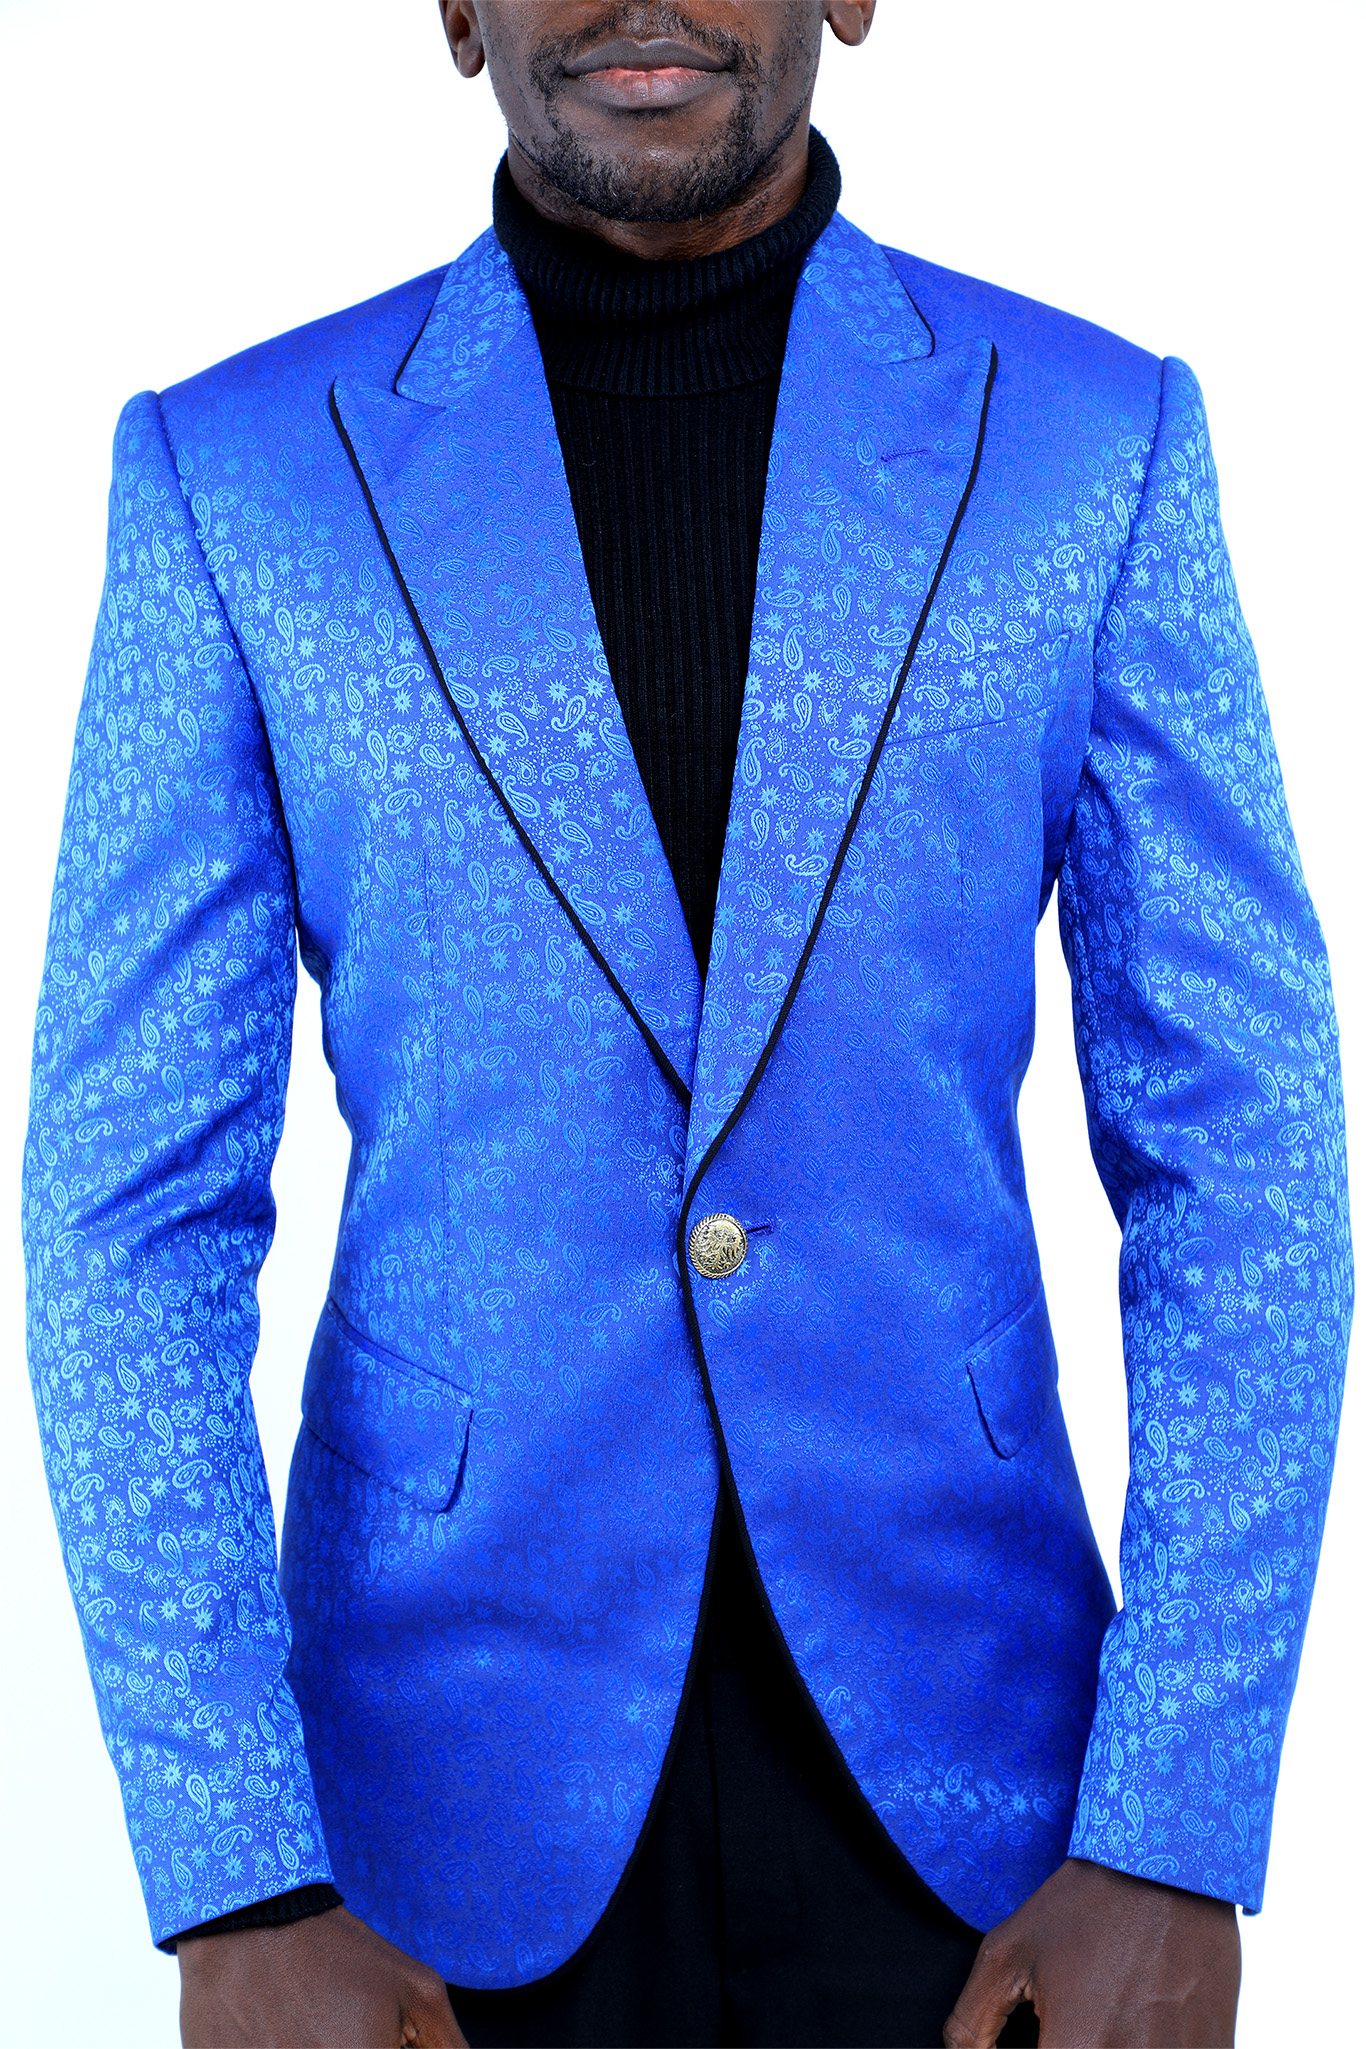 Blue paisley dinner jacket Nairobi Kenya